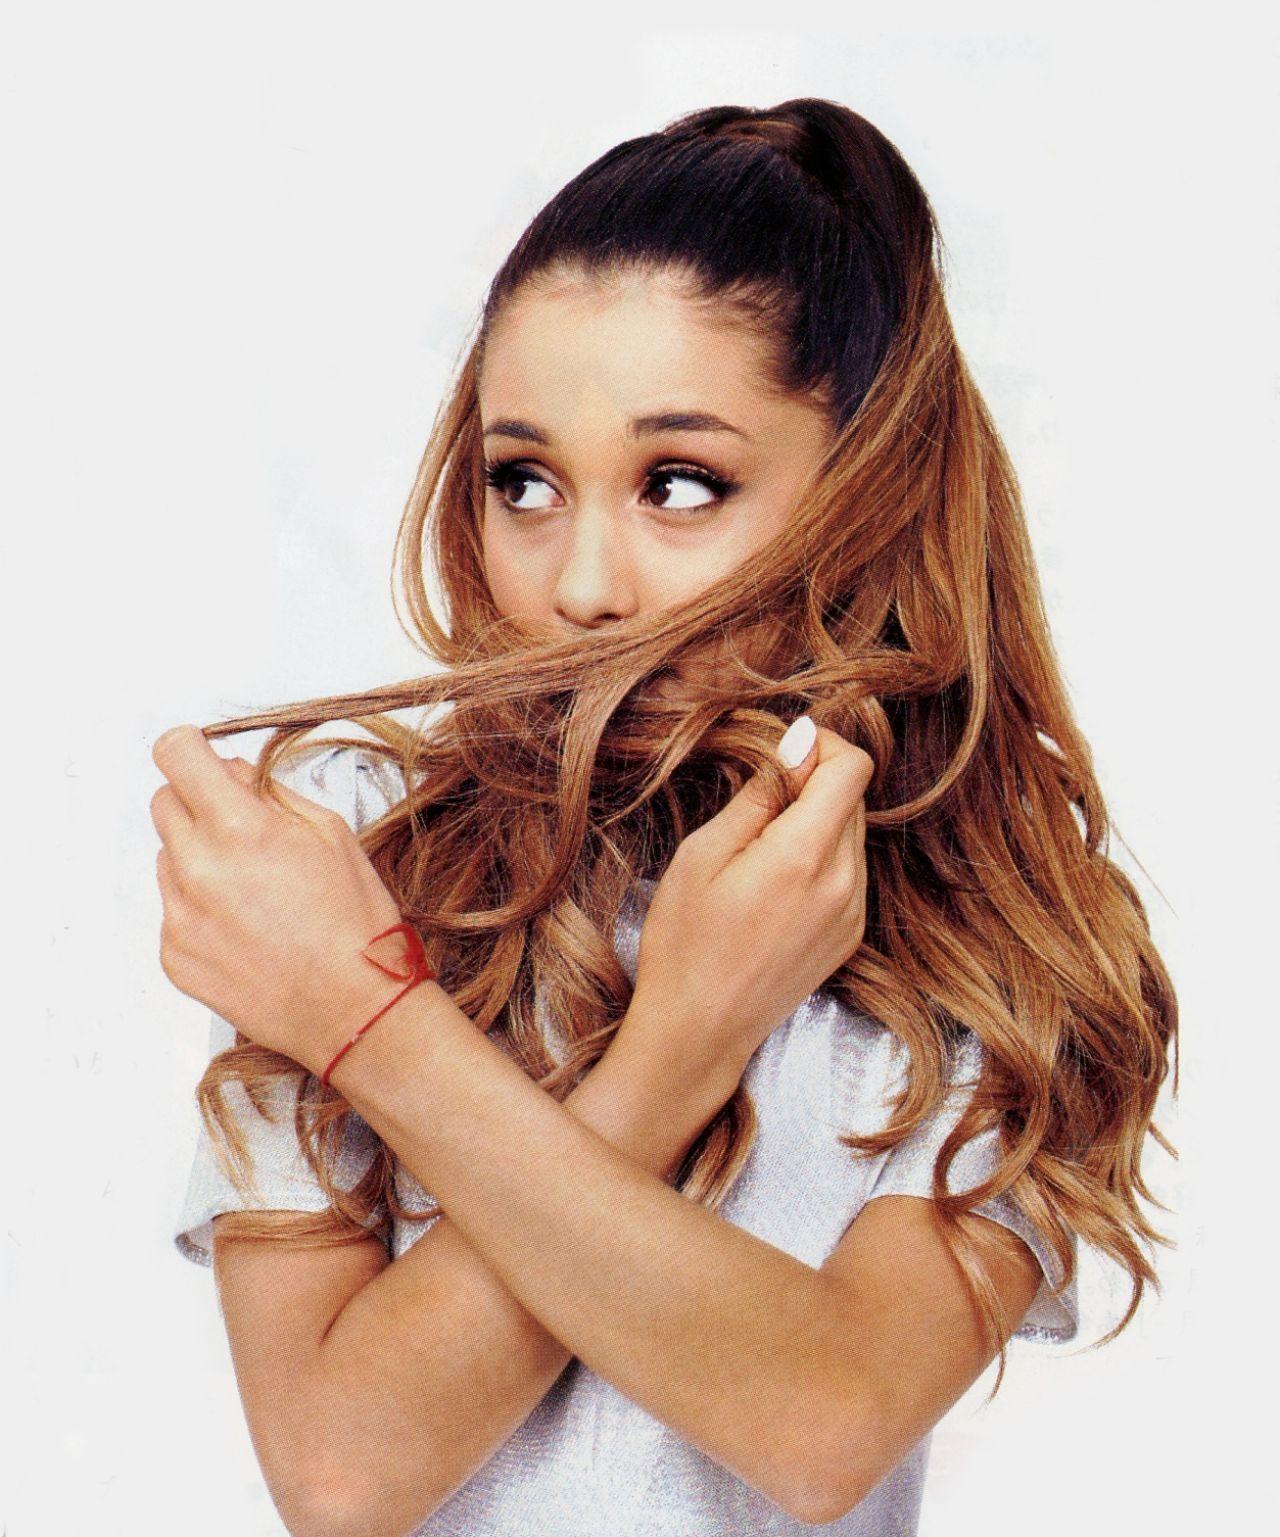 Ariana Grande Iphone Wallpapers Top Free Ariana Grande Iphone Backgrounds Wallpaperaccess